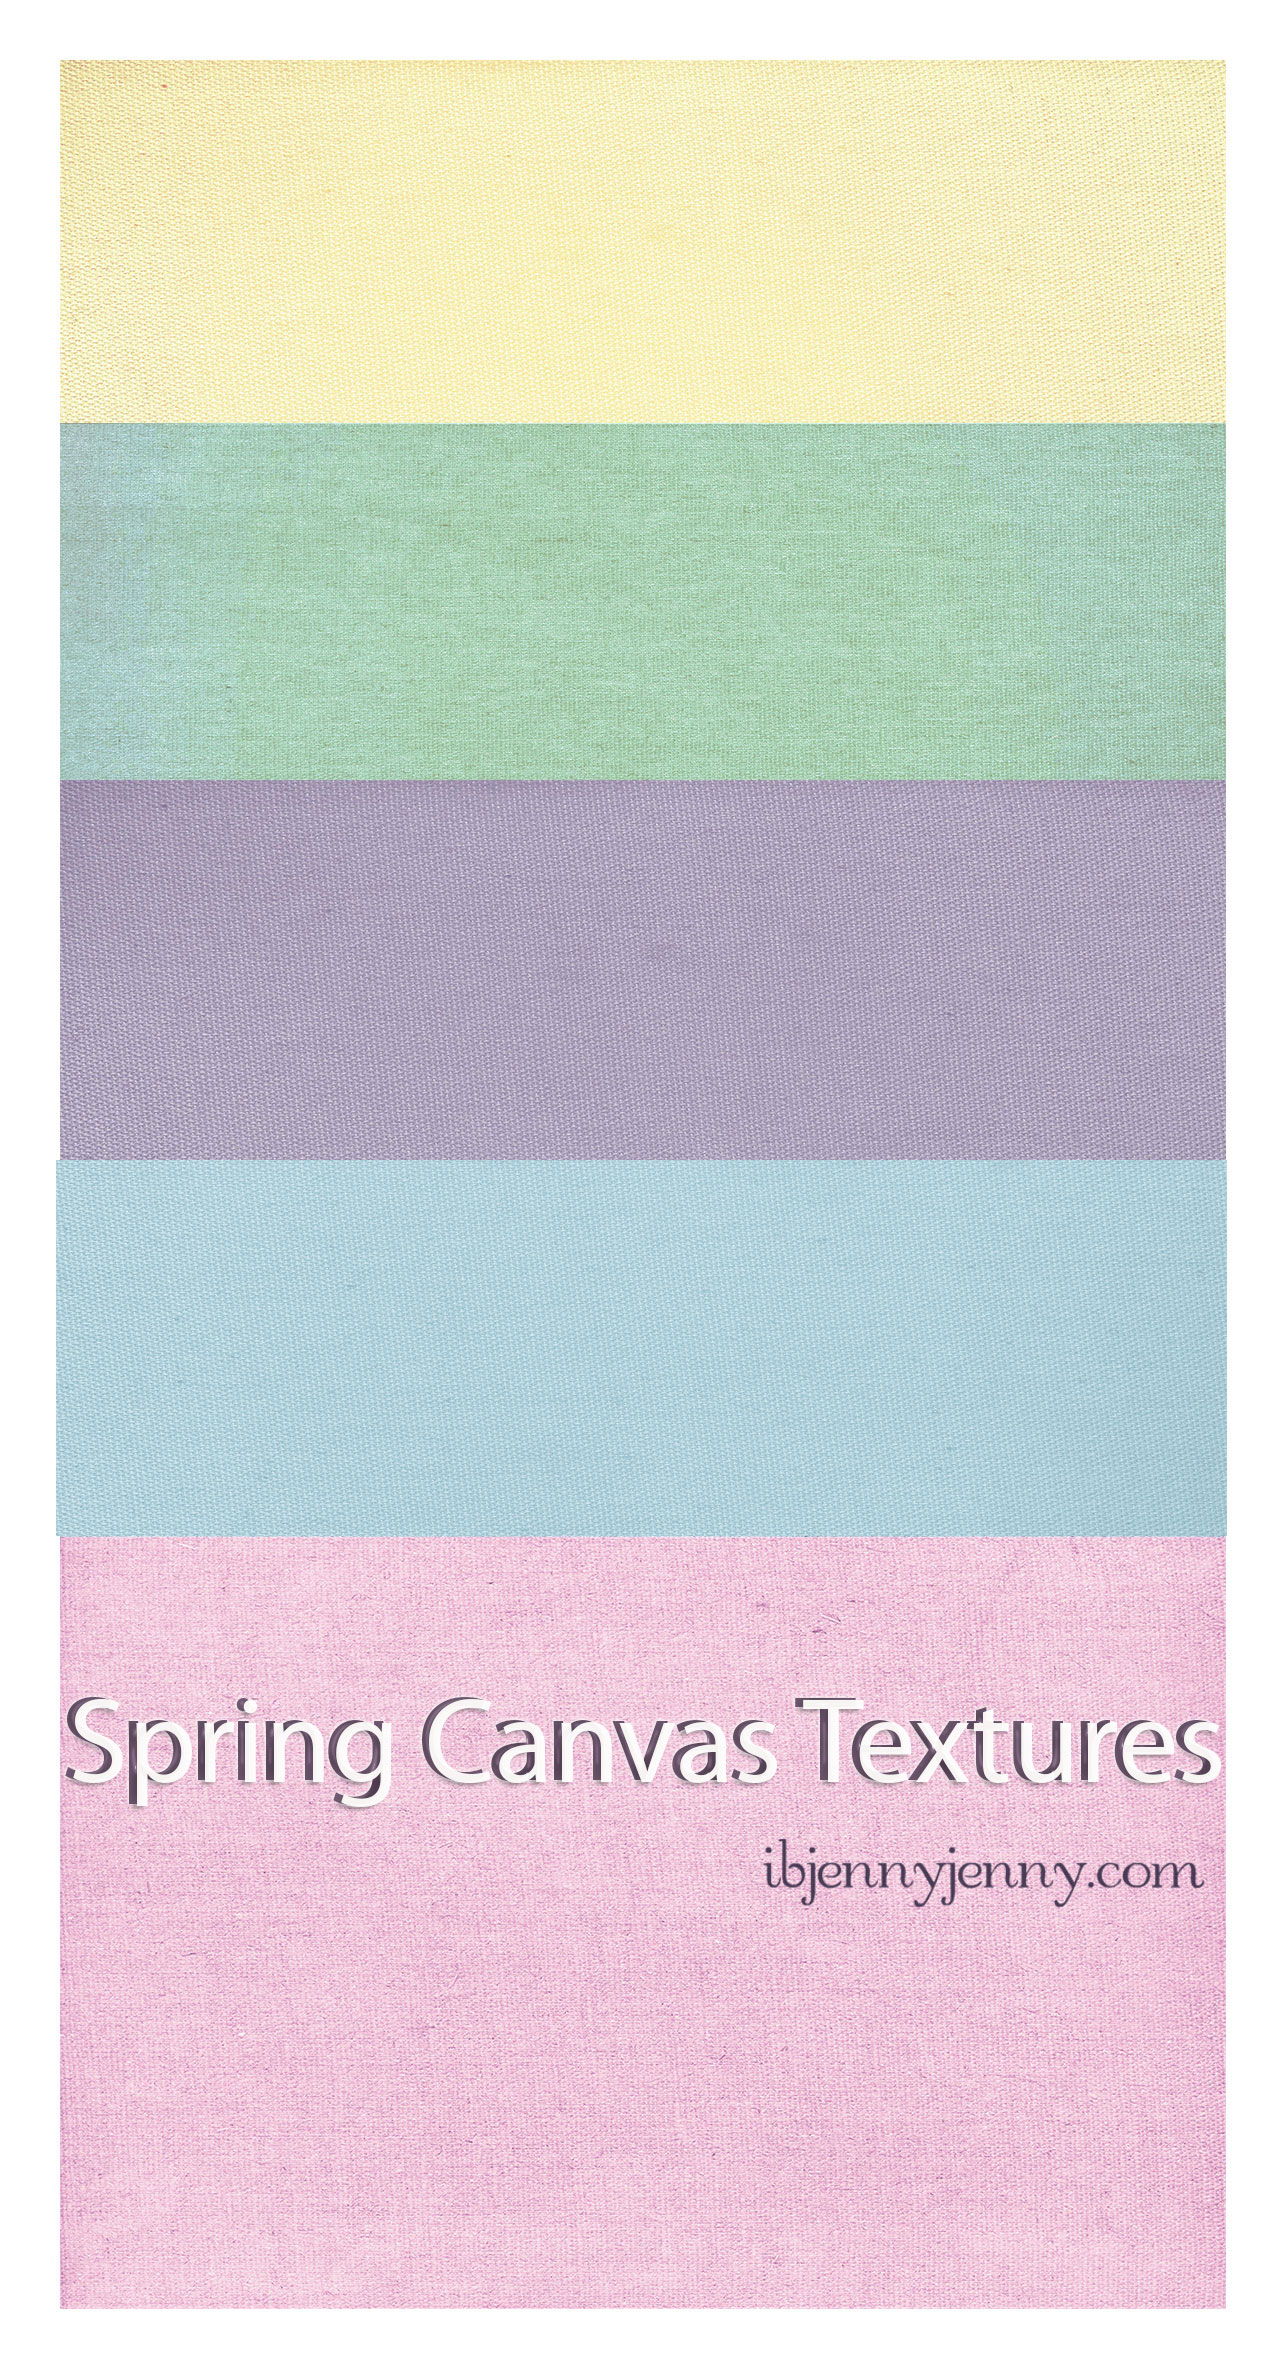 Spring Canvas Textures